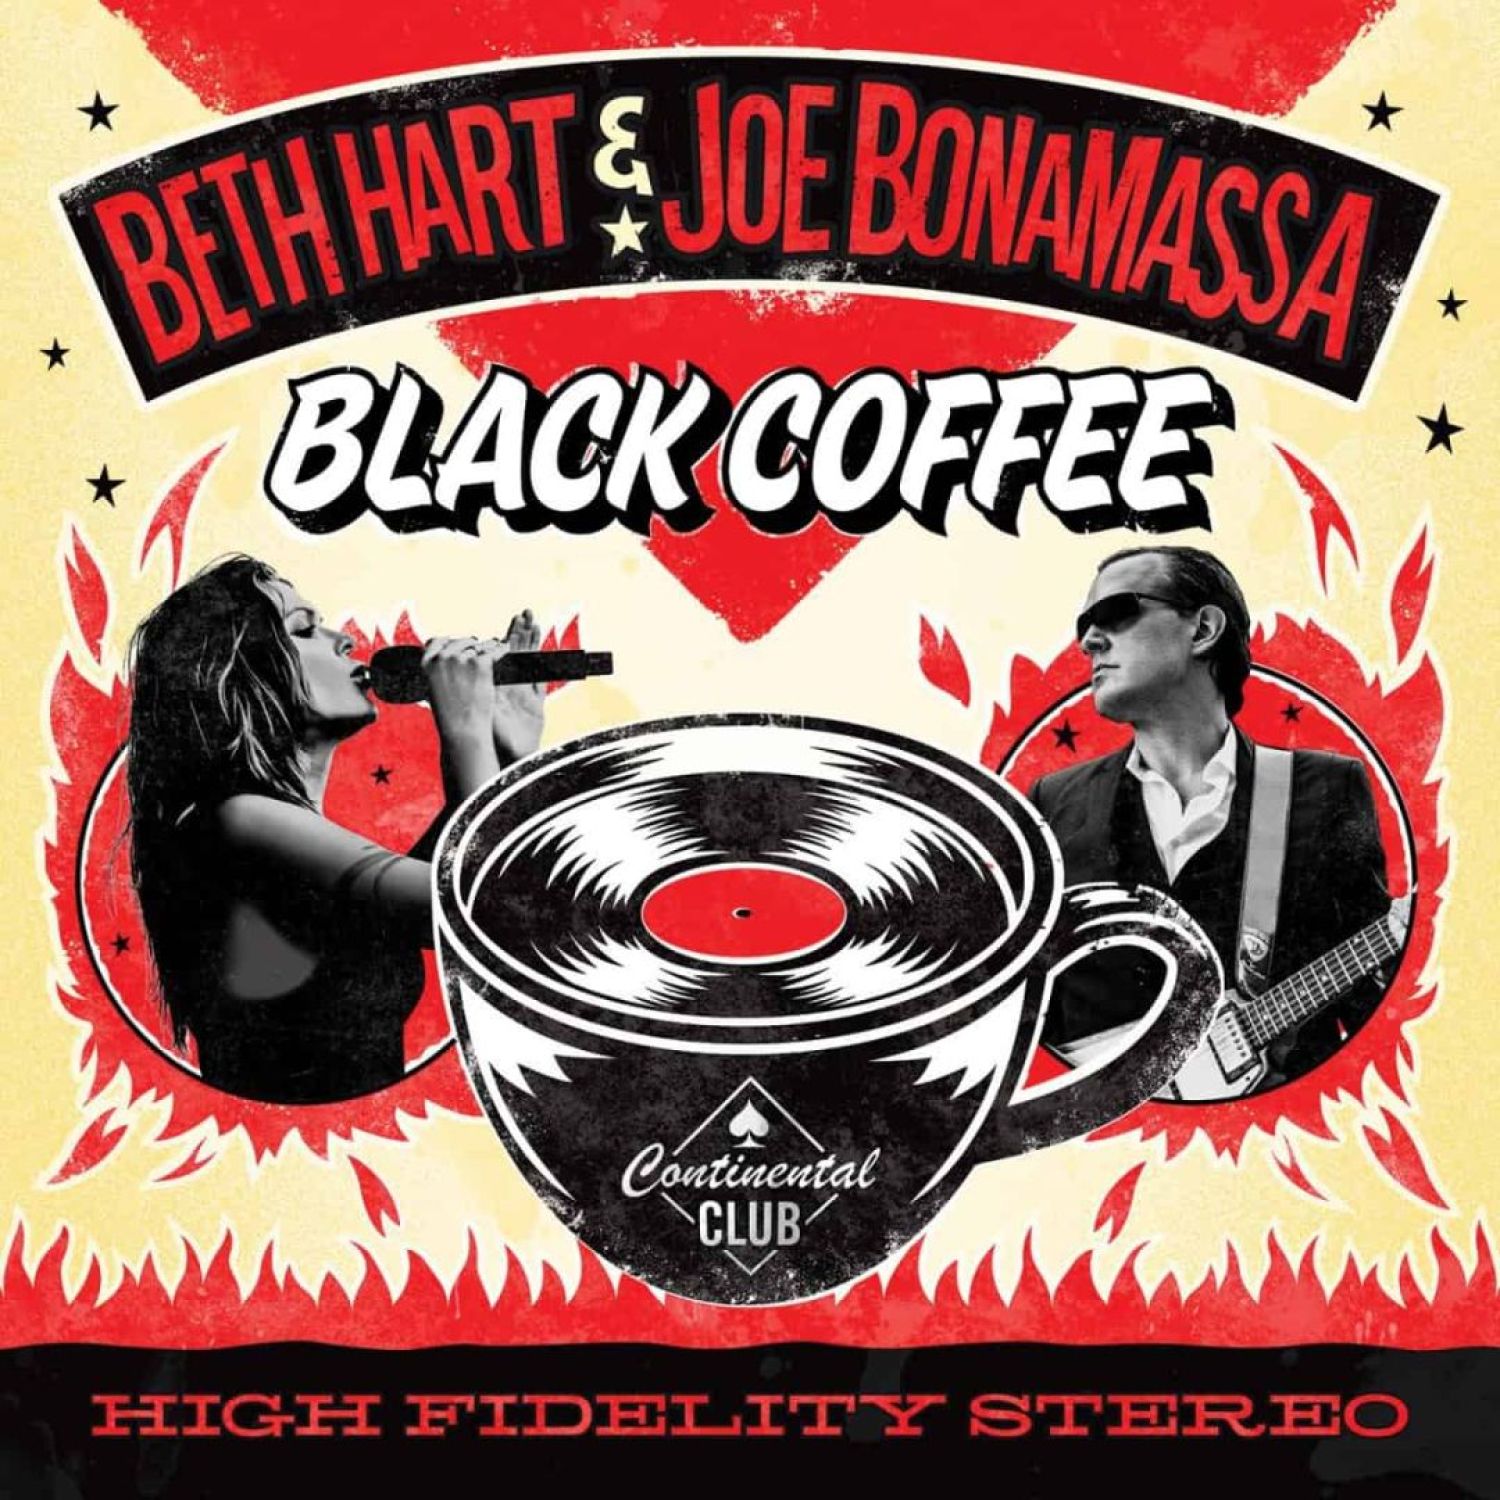 Beth Hart Joe Bonamassa Black Coffee